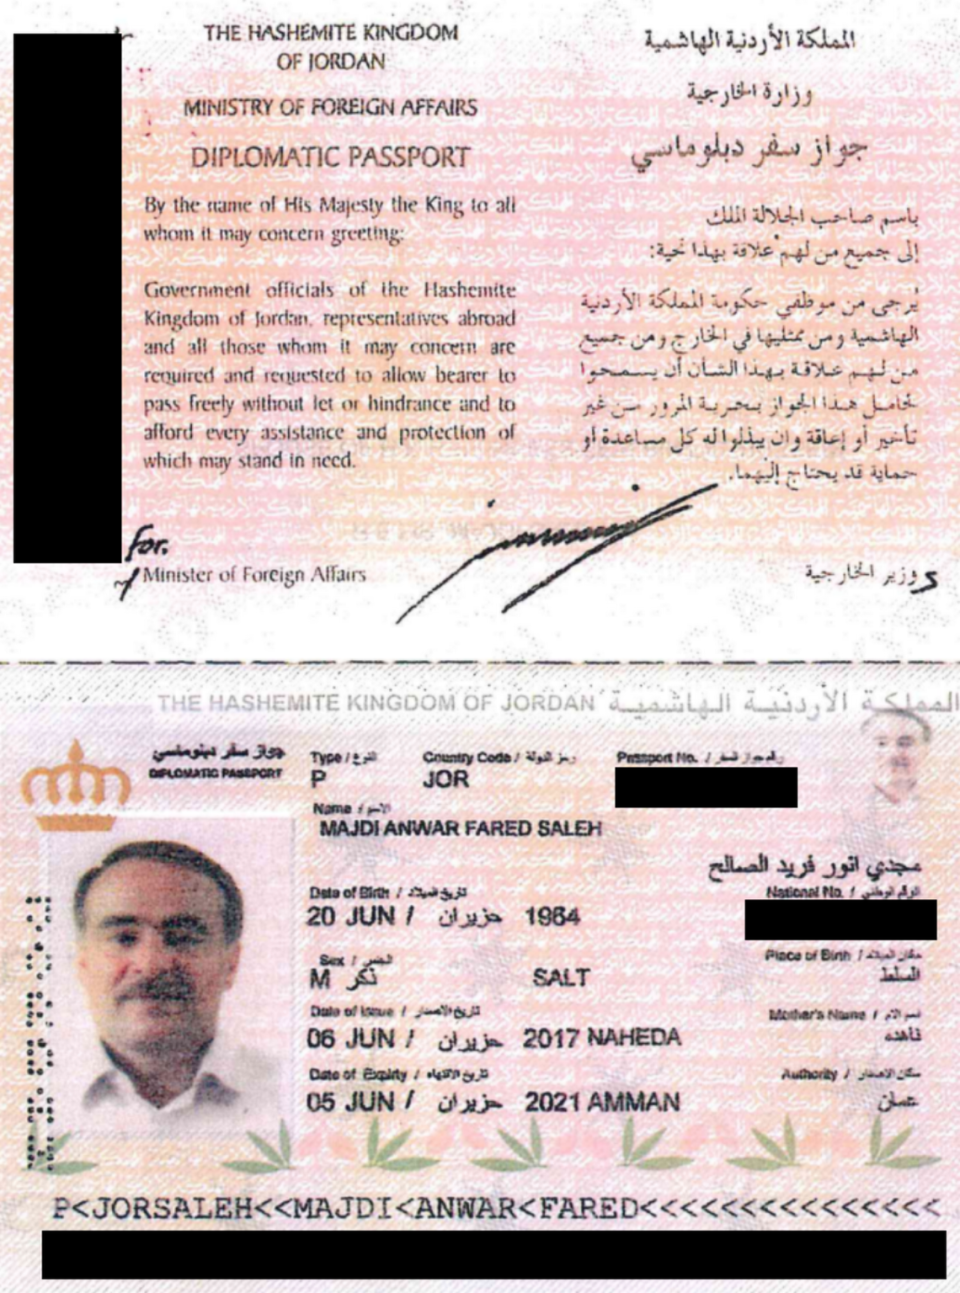 Now-leaked copy of Majdi Anwar Fared Saleh’s passport